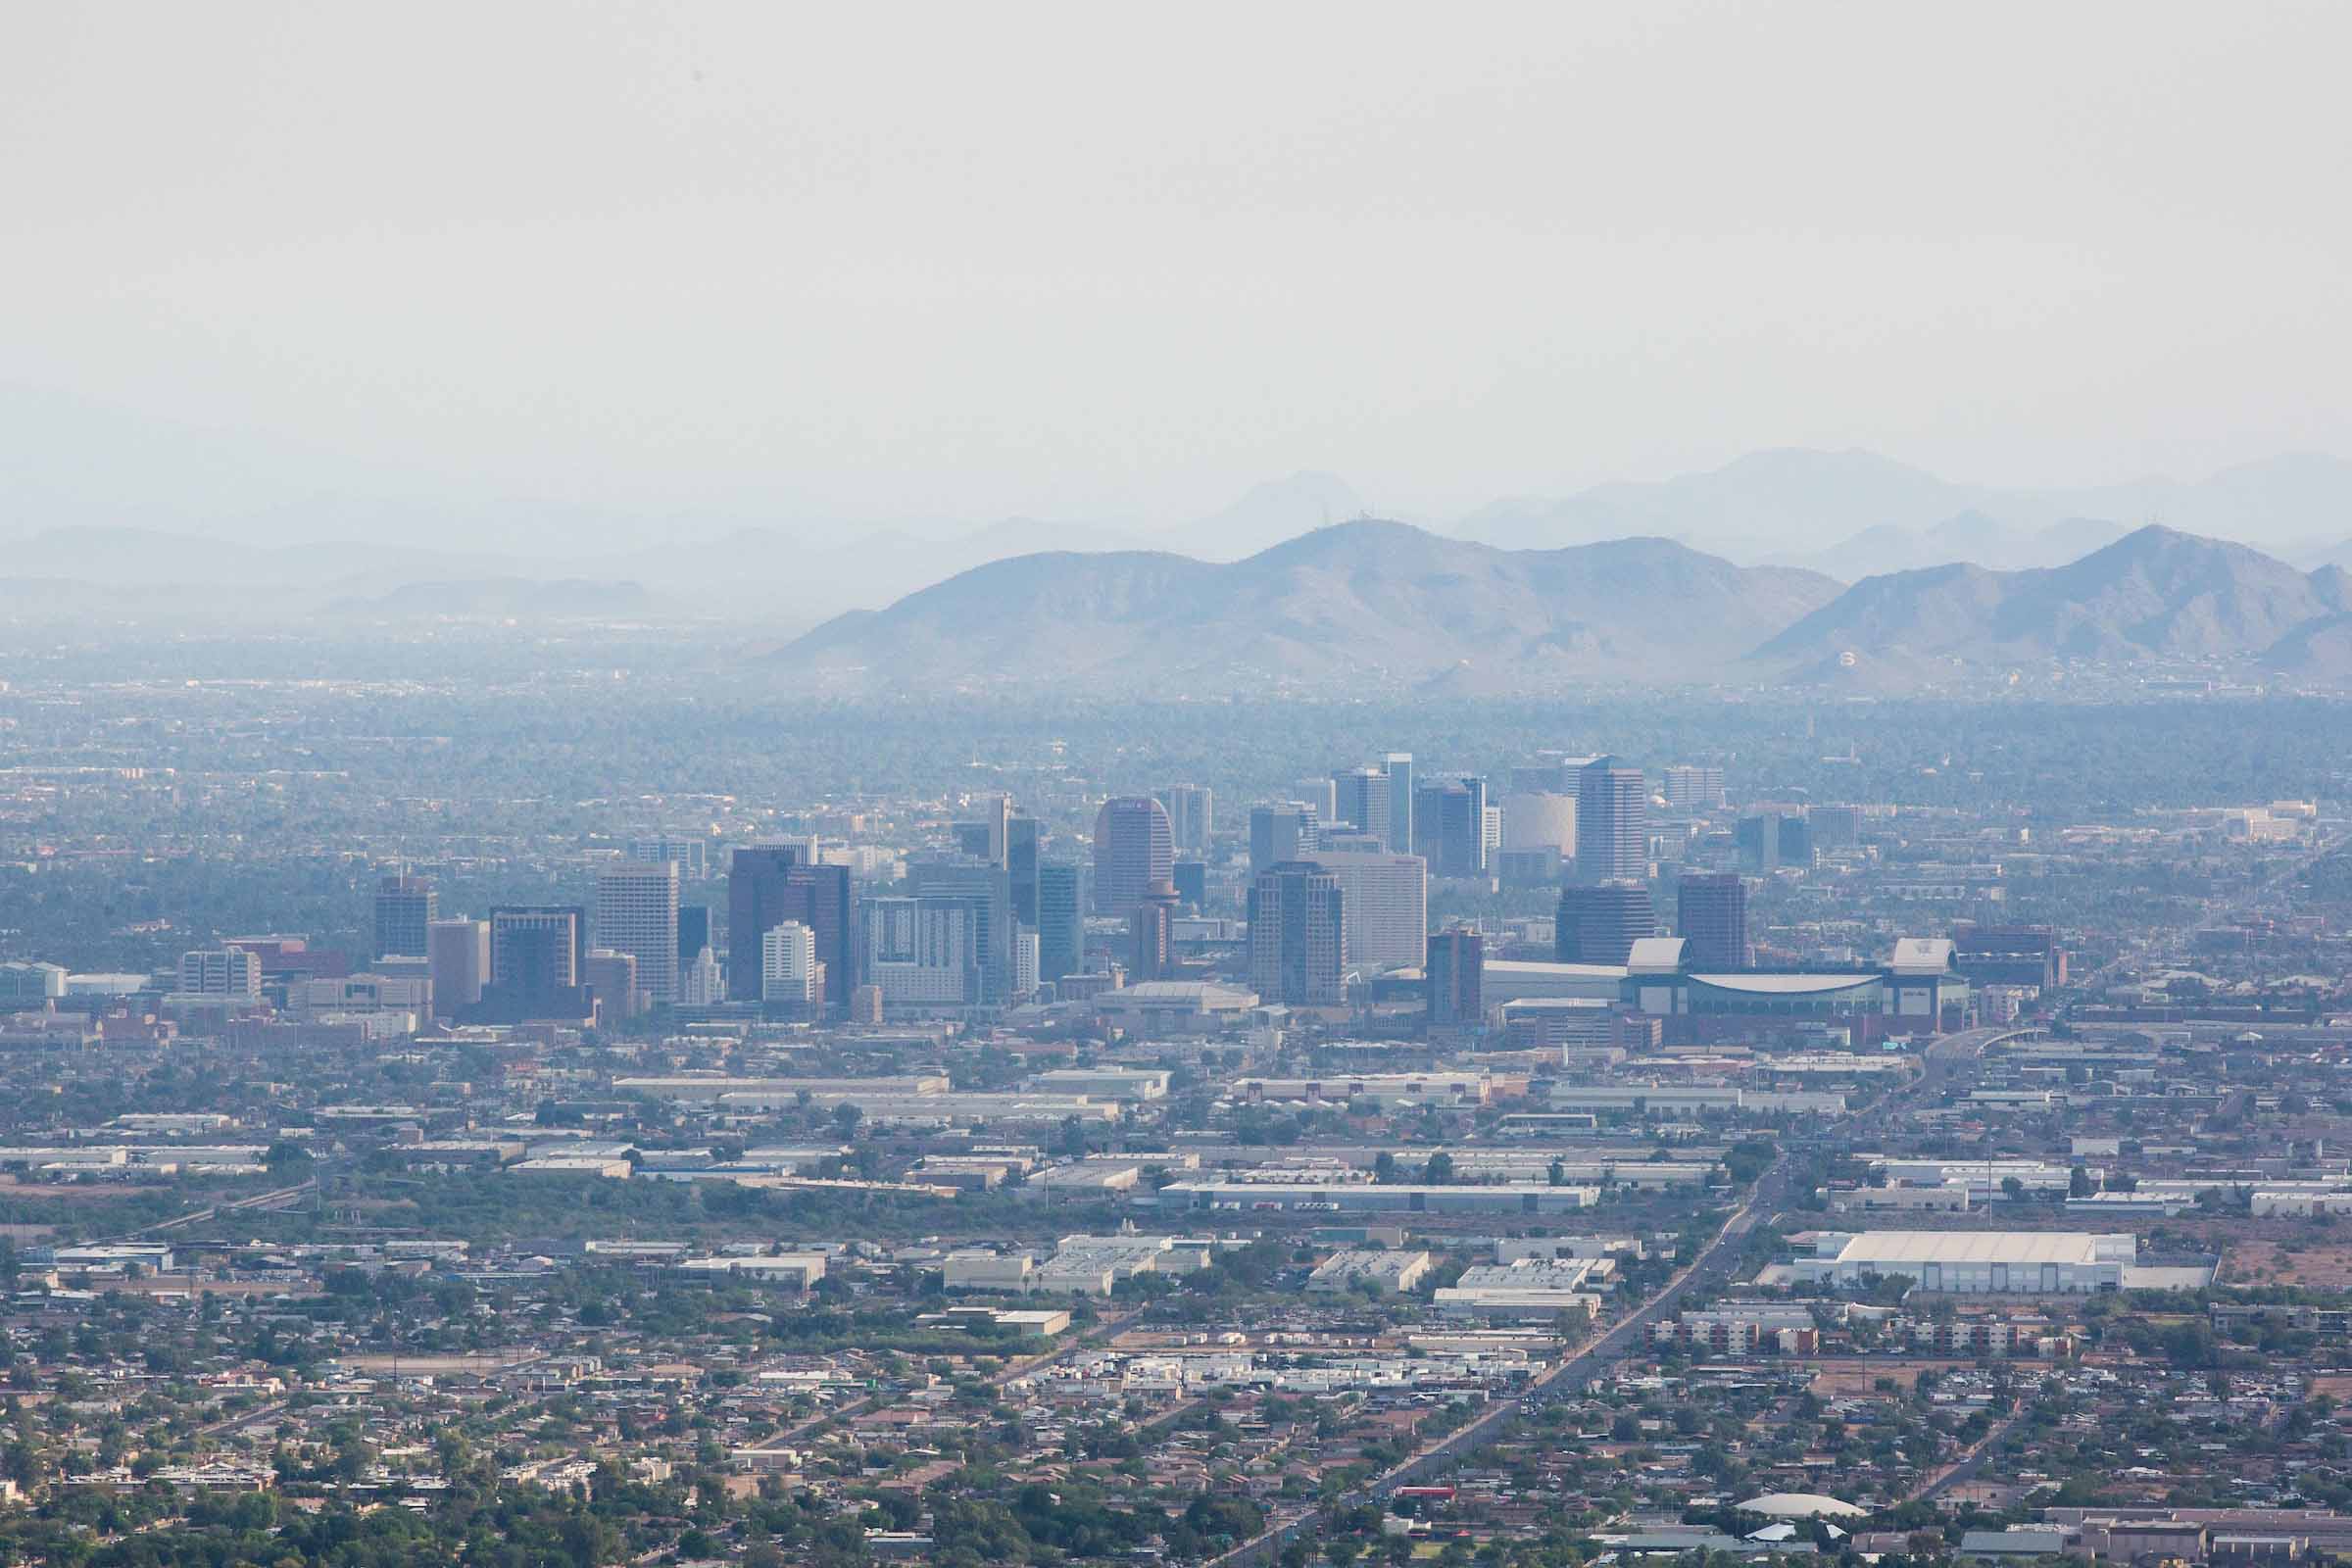 Stock image of the Phoenix, Arizona metropolitan area.